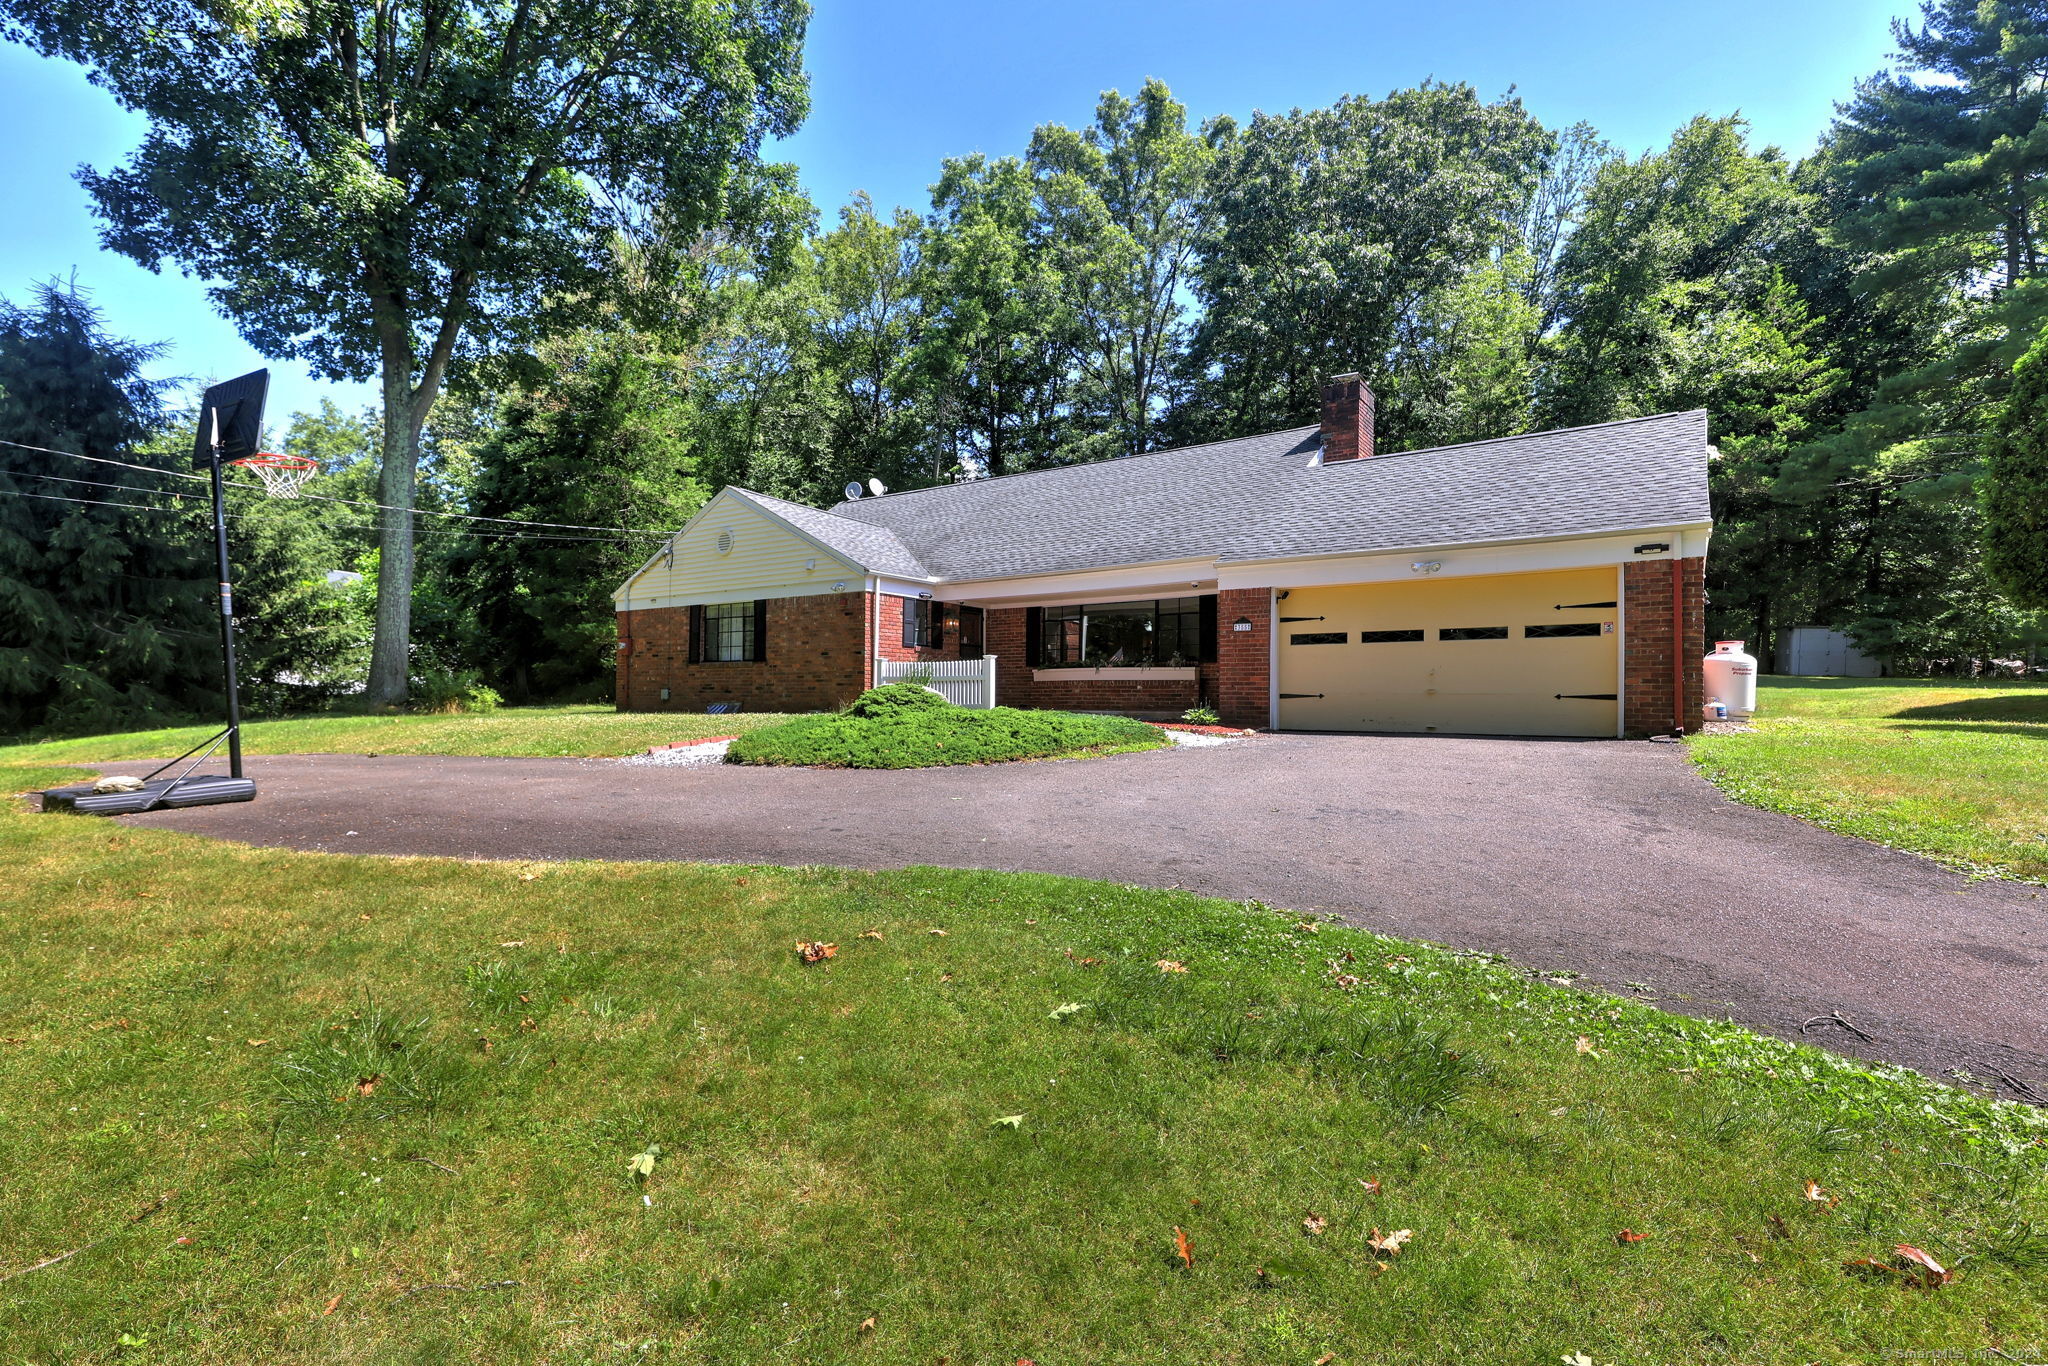 Property for Sale at 355 Racebrook Road, Orange, Connecticut - Bedrooms: 3 
Bathrooms: 2 
Rooms: 6  - $549,900